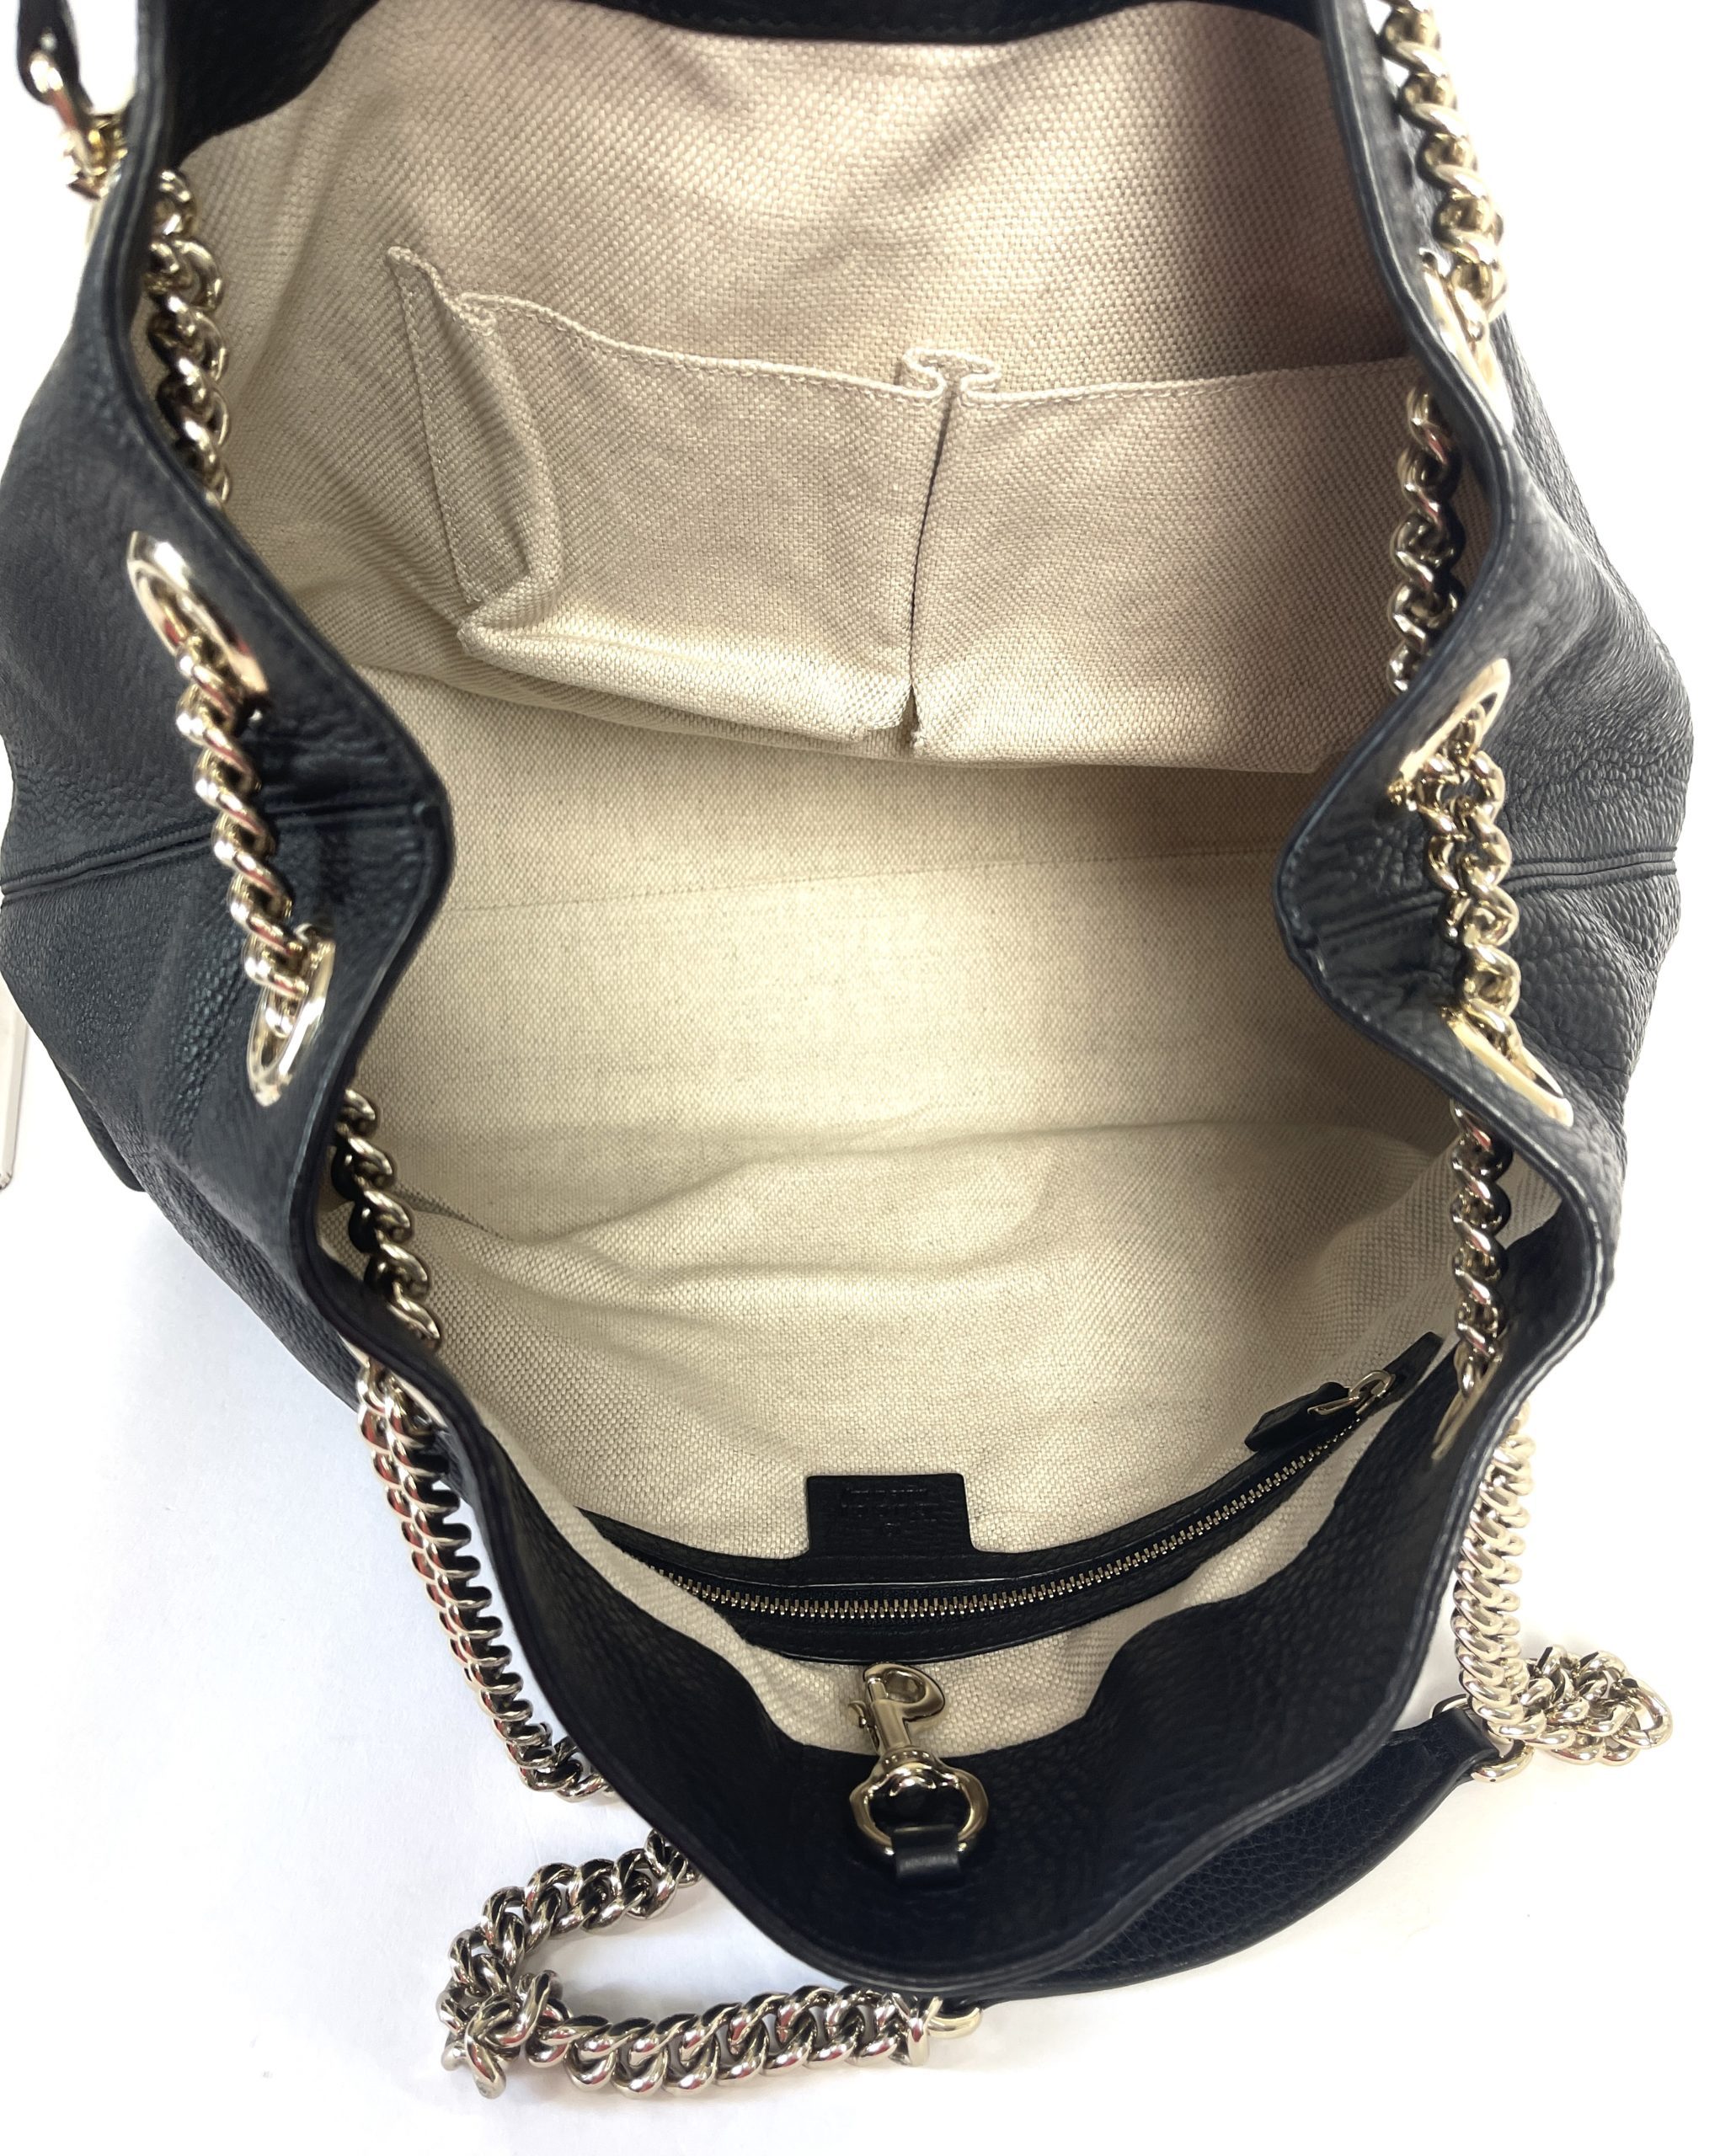 Gucci Soho Medium Black Double Leather Chain Shoulder Bag Tote Black Gold  New